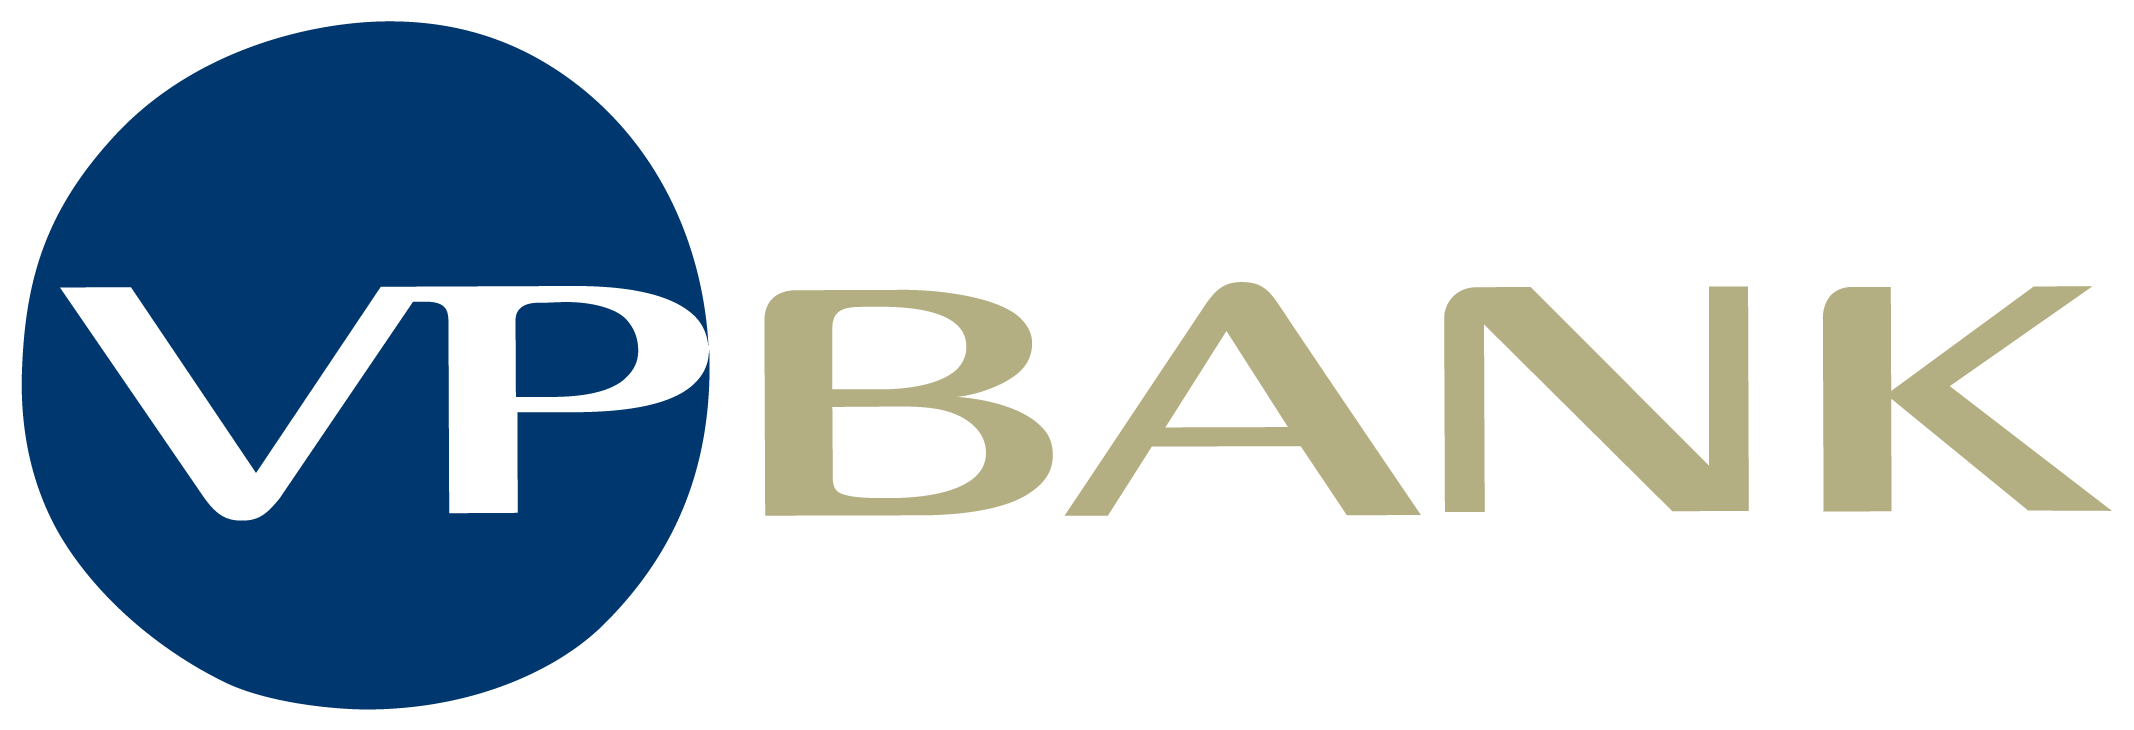 VP Bank Logo